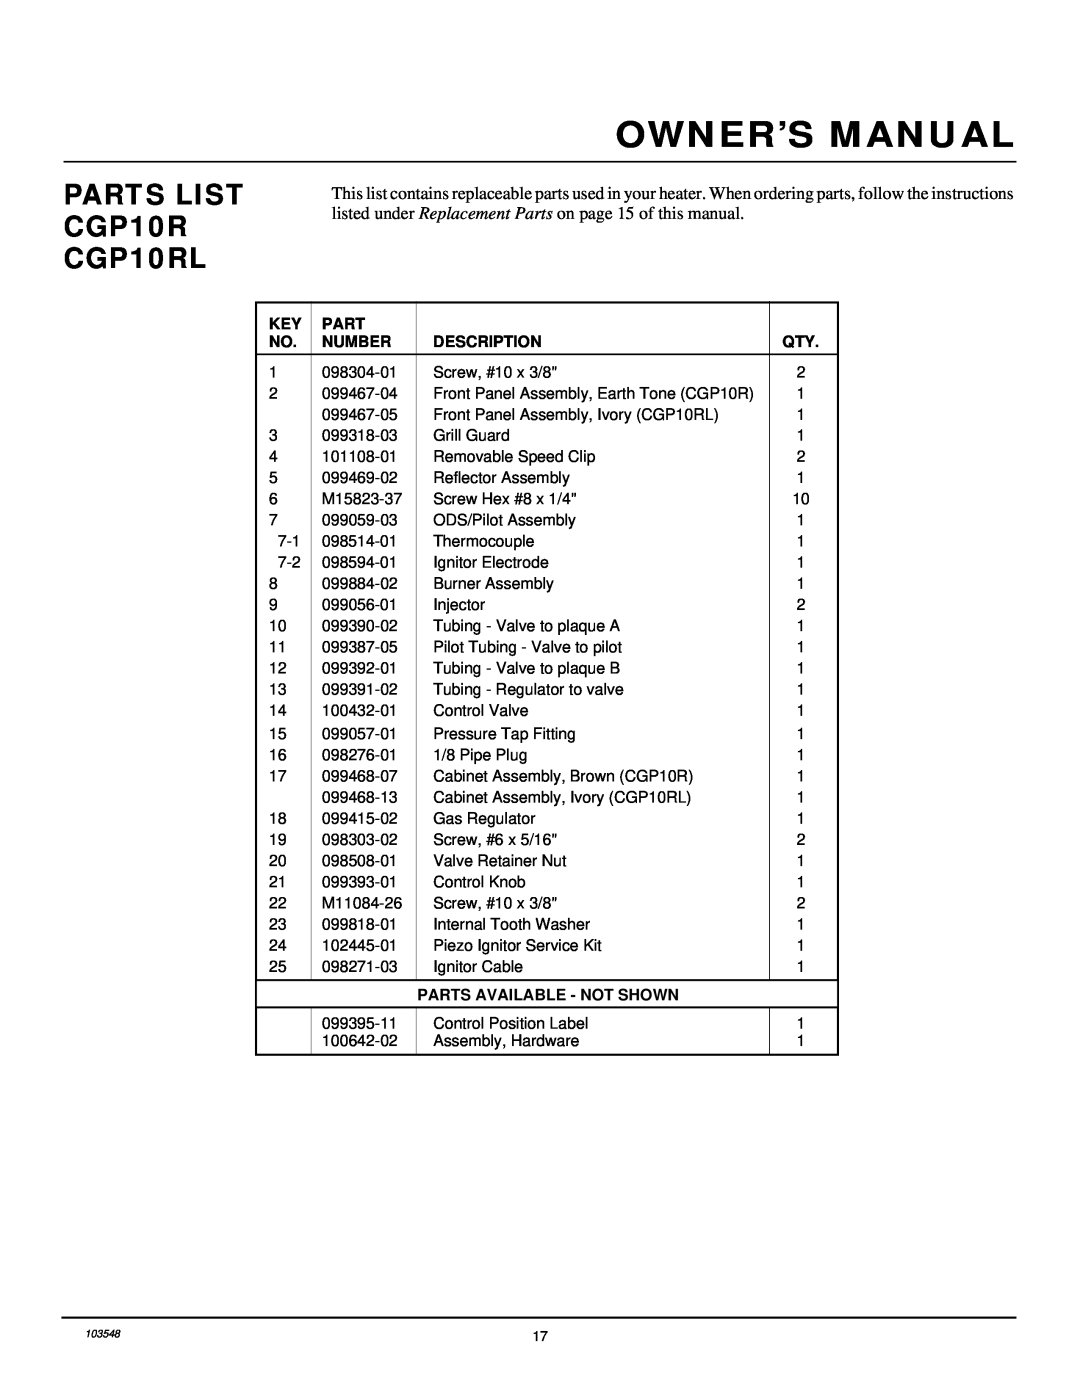 Desa installation manual PARTS LIST CGP10R CGP10RL, Number, Description, Parts Available - Not Shown 